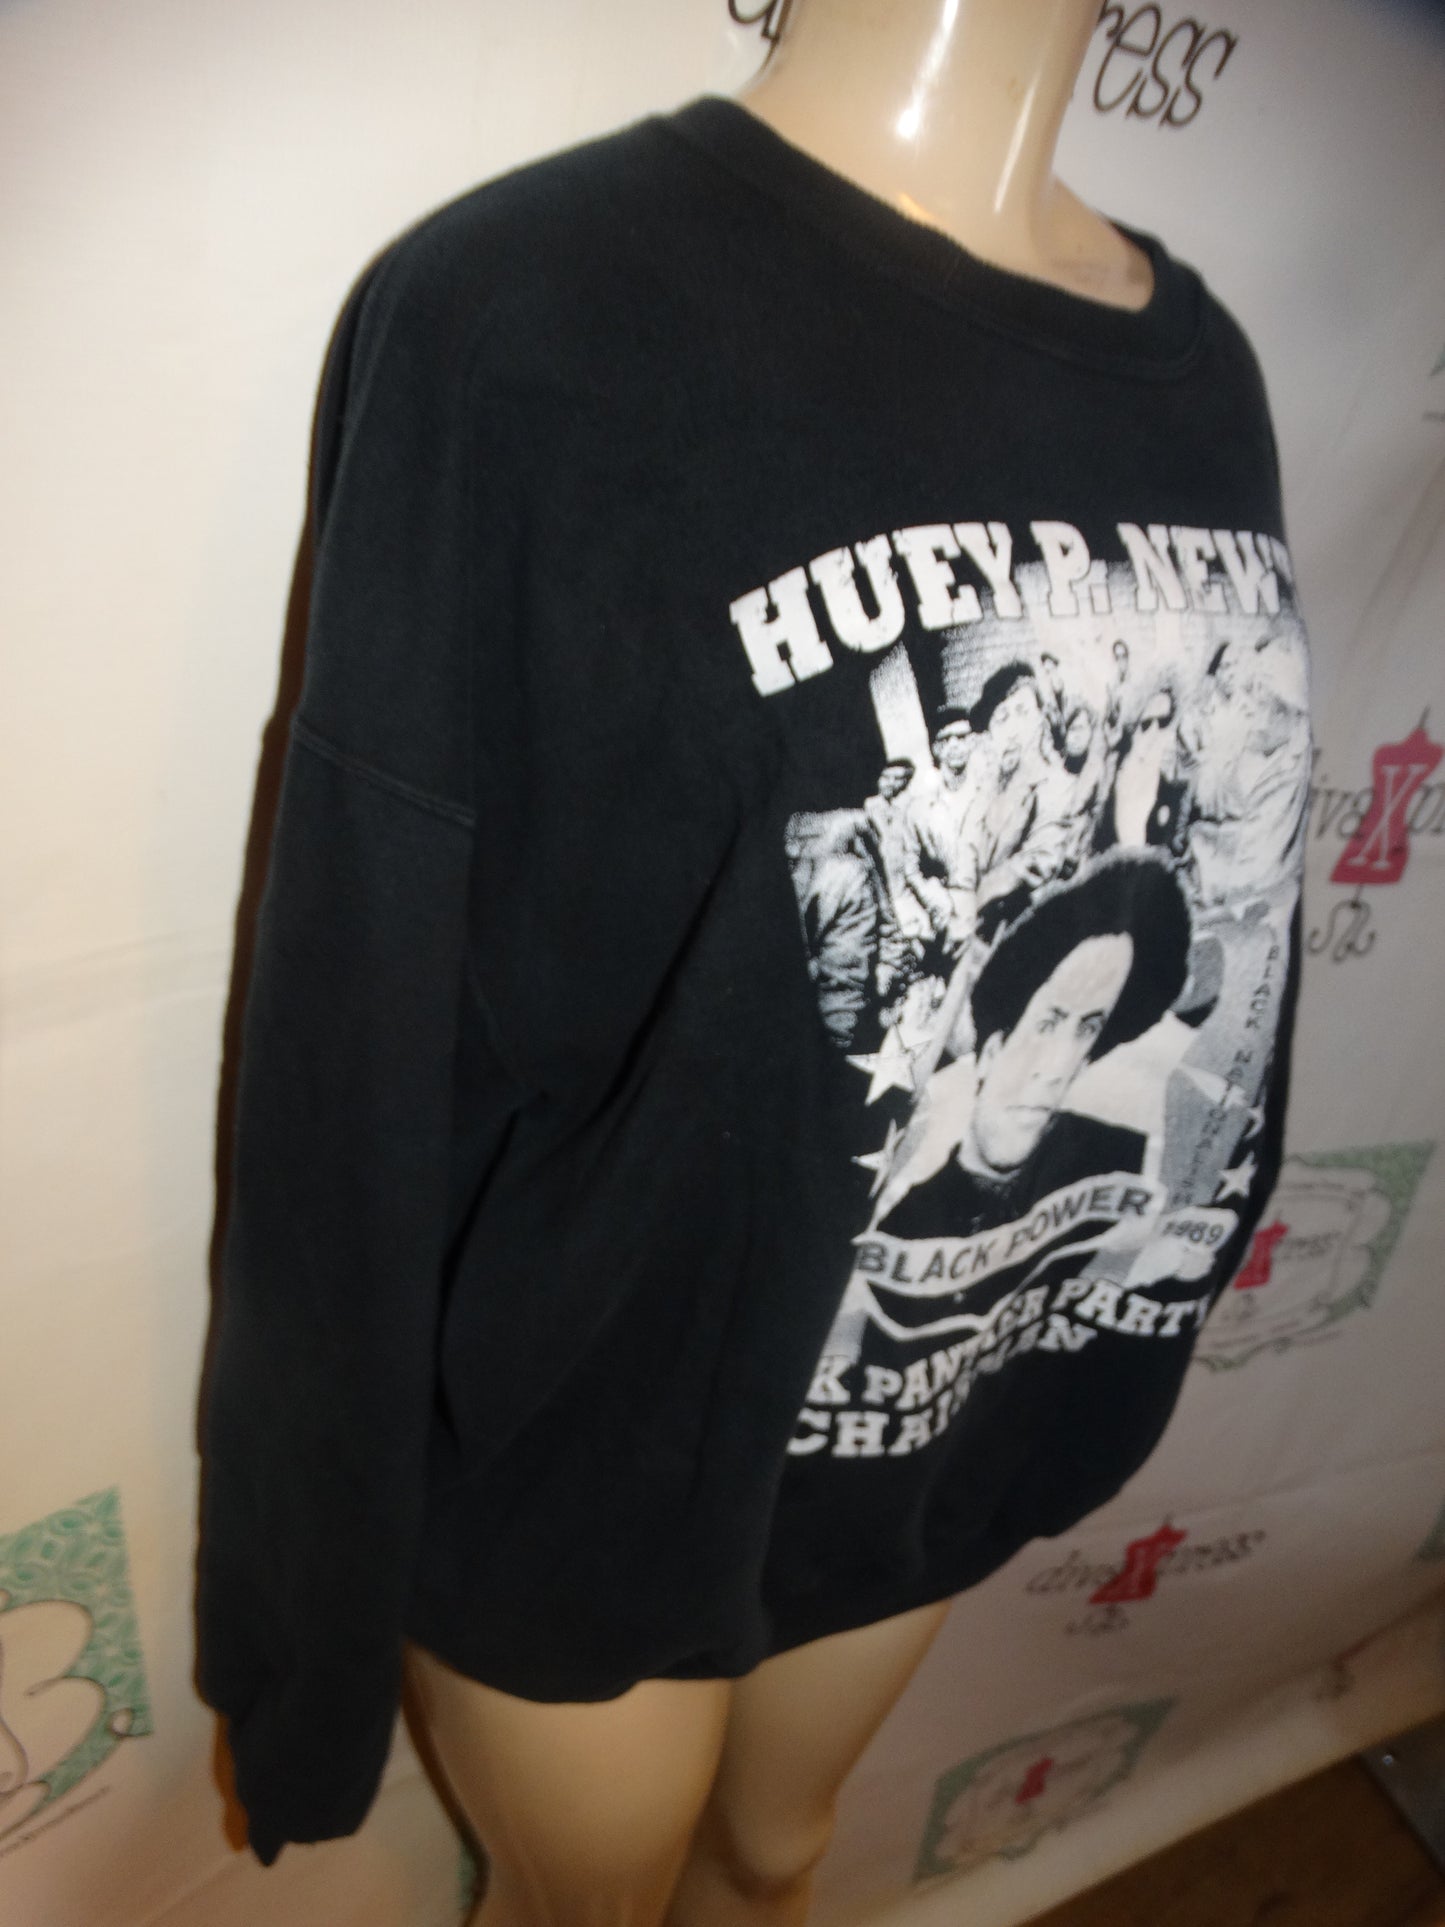 Vintage Huey Newton Black panther Sweat Shirt size XL/1x